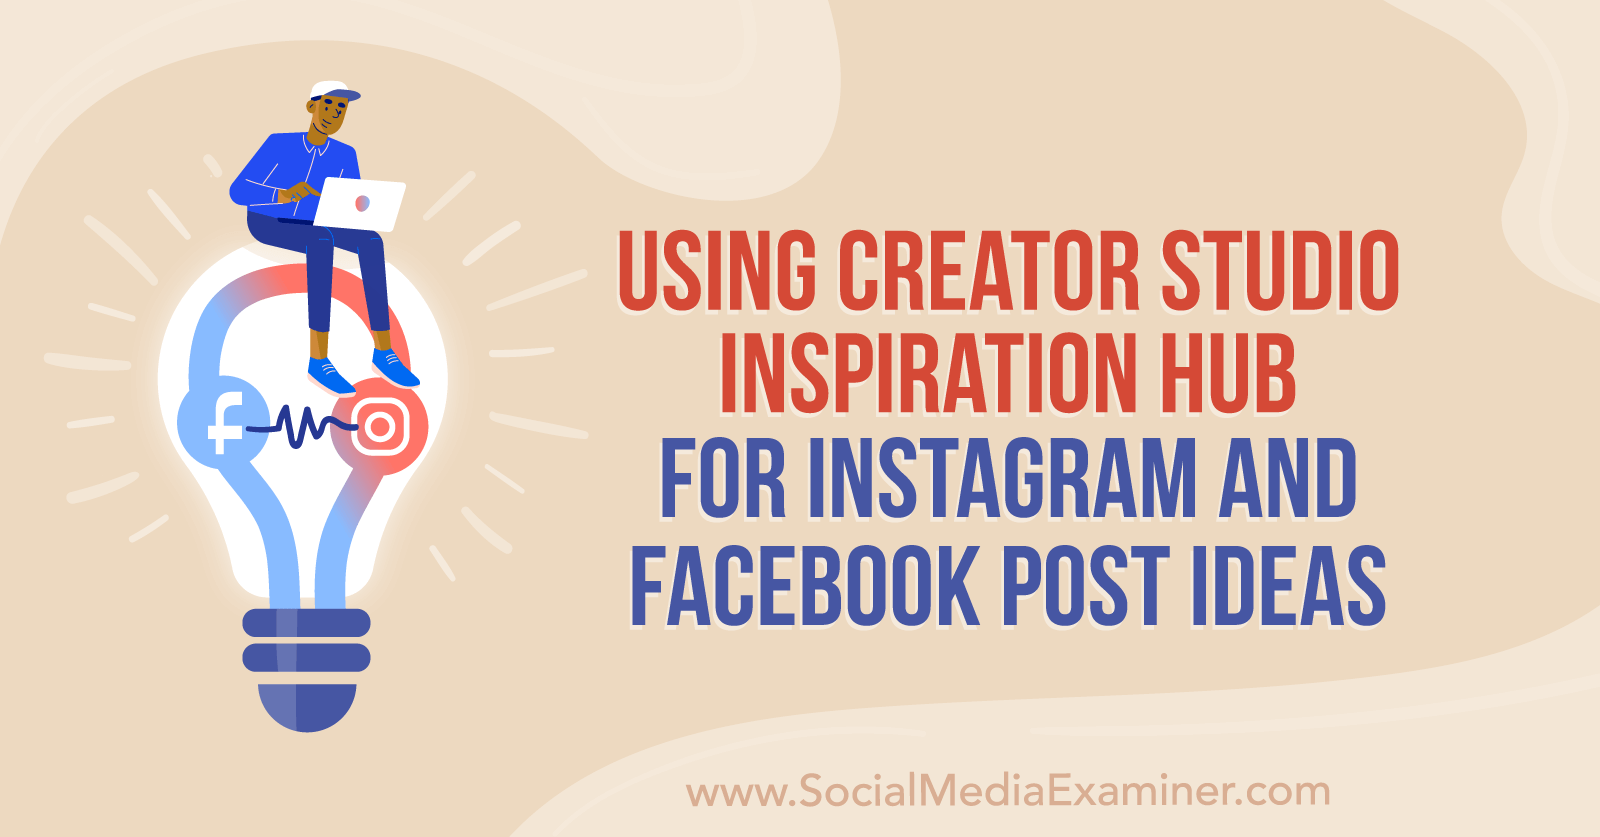 Using Creator Studio Inspiration Hub for Instagram and Facebook